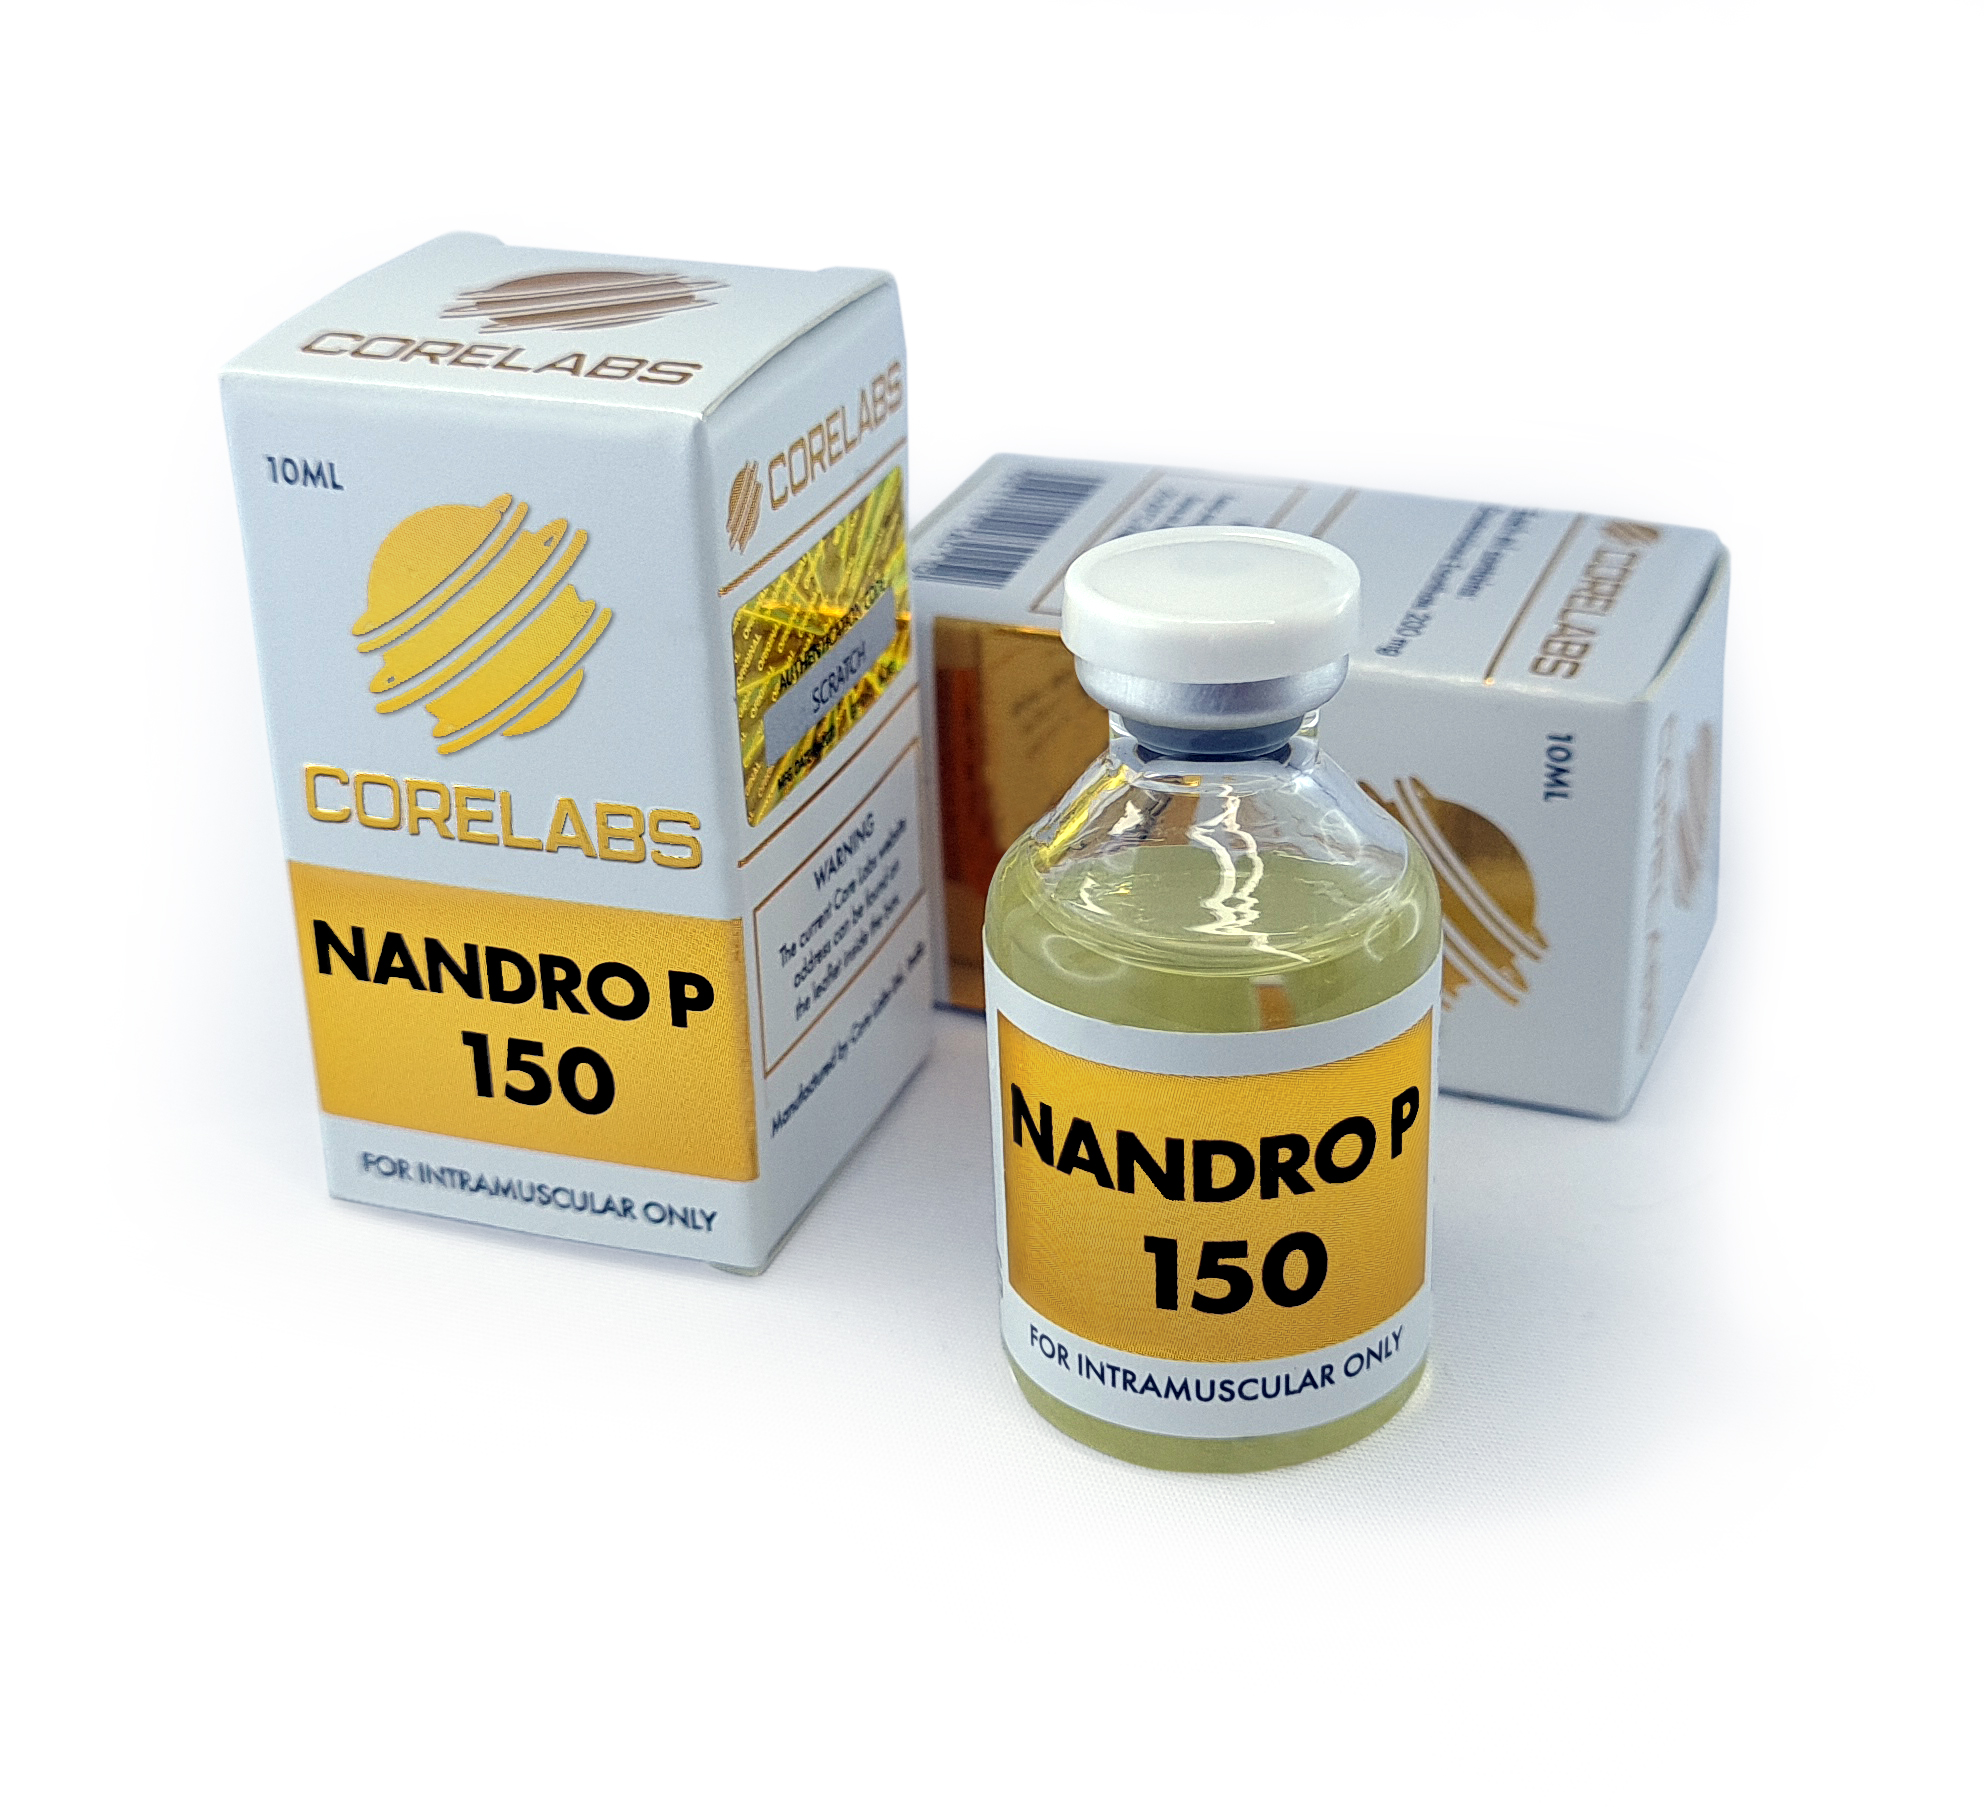 Nandro P 150